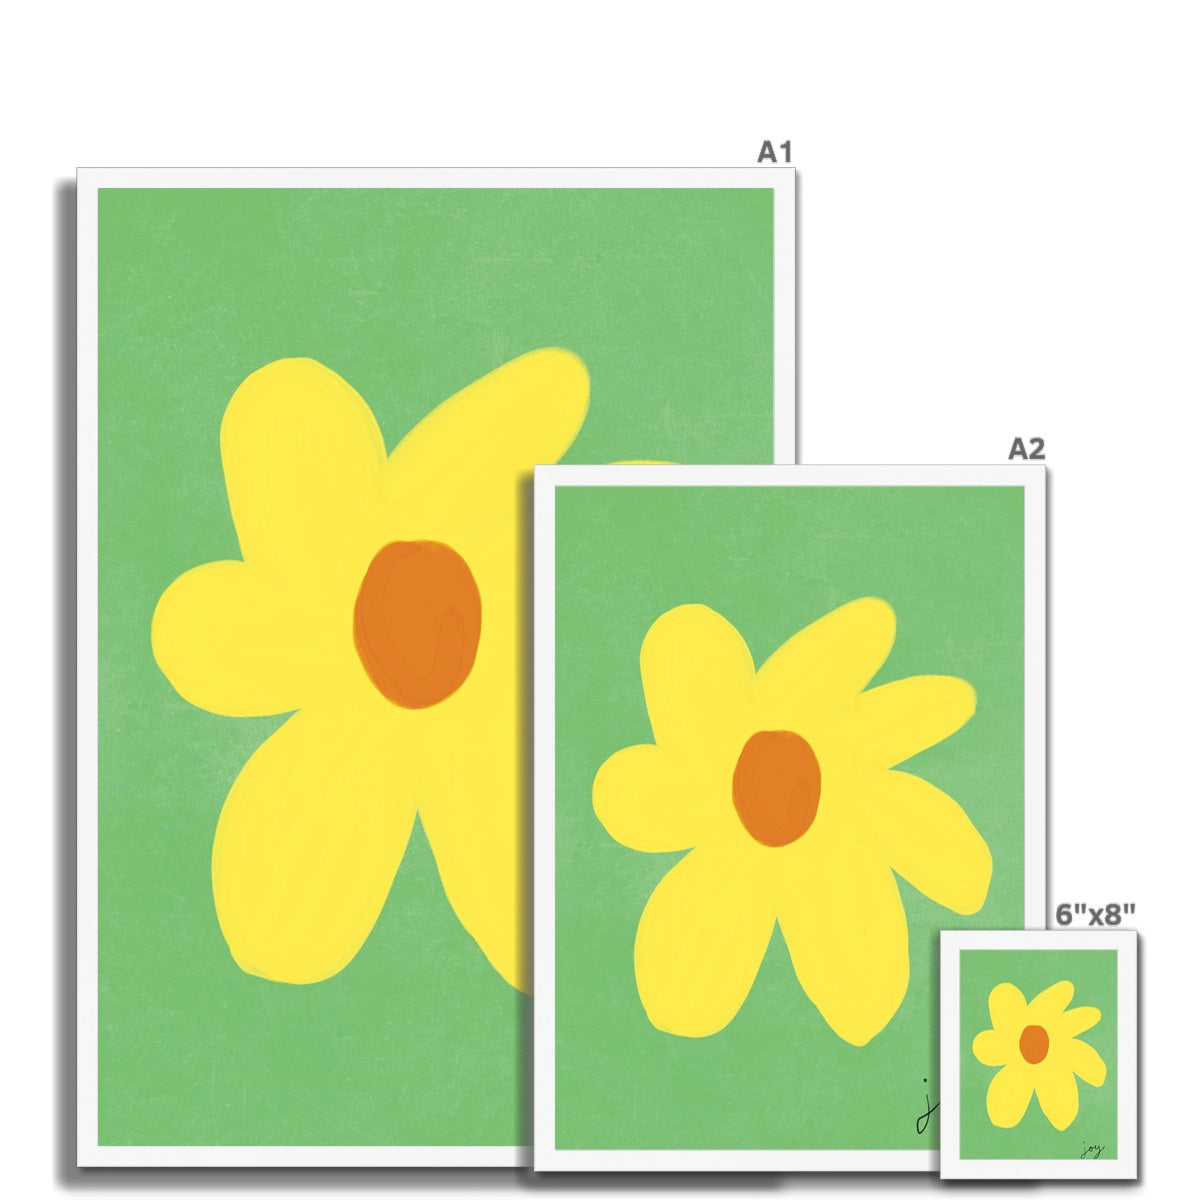 Joy Flower Print - Green, Yellow, Brown Framed Print